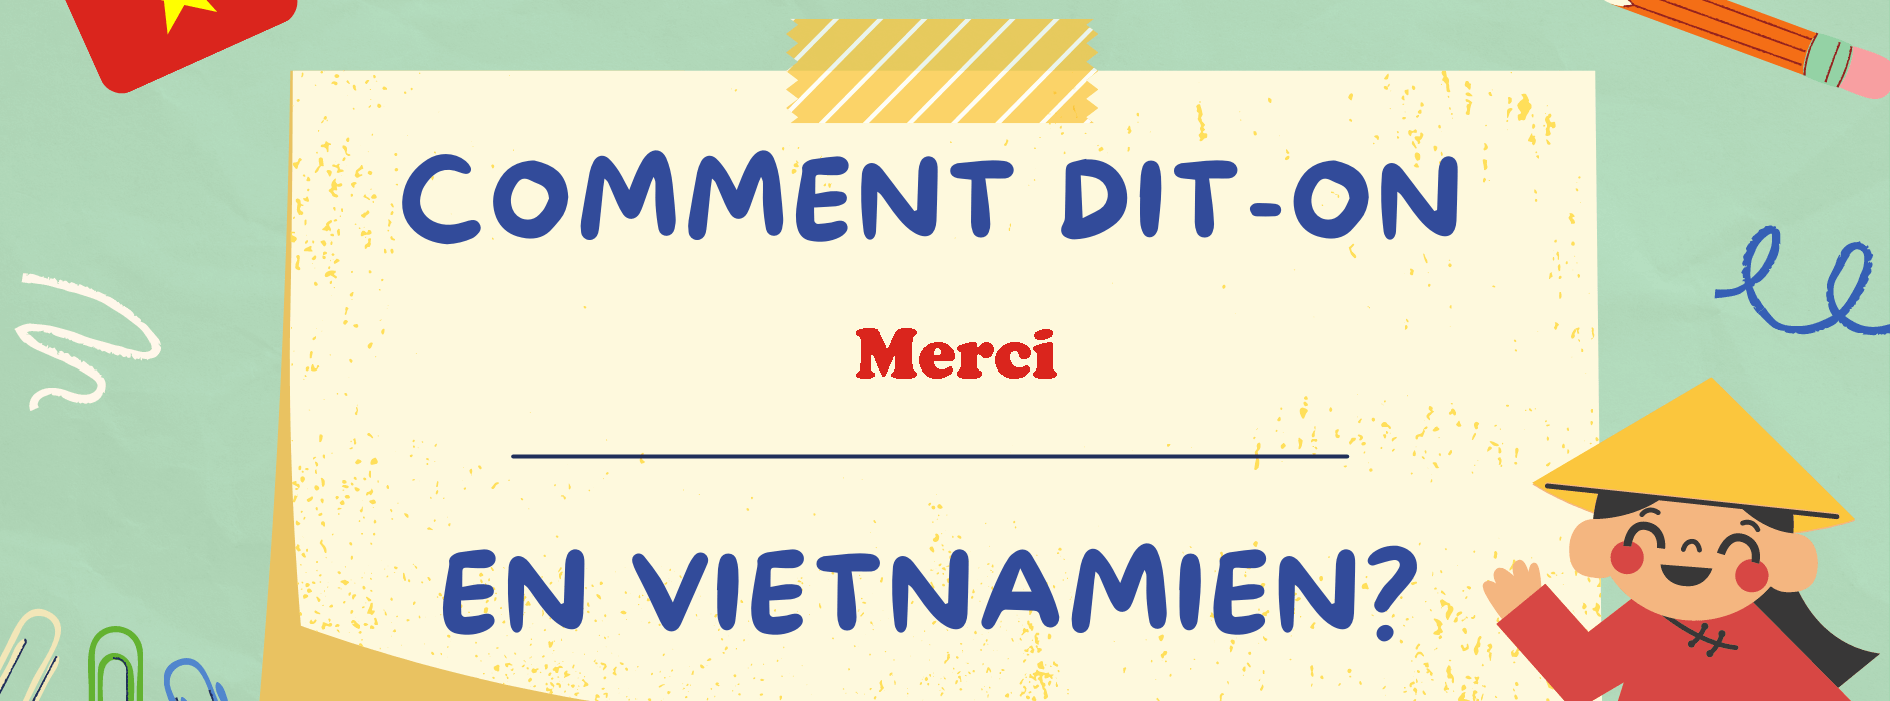 comment dire merci en vietnamien